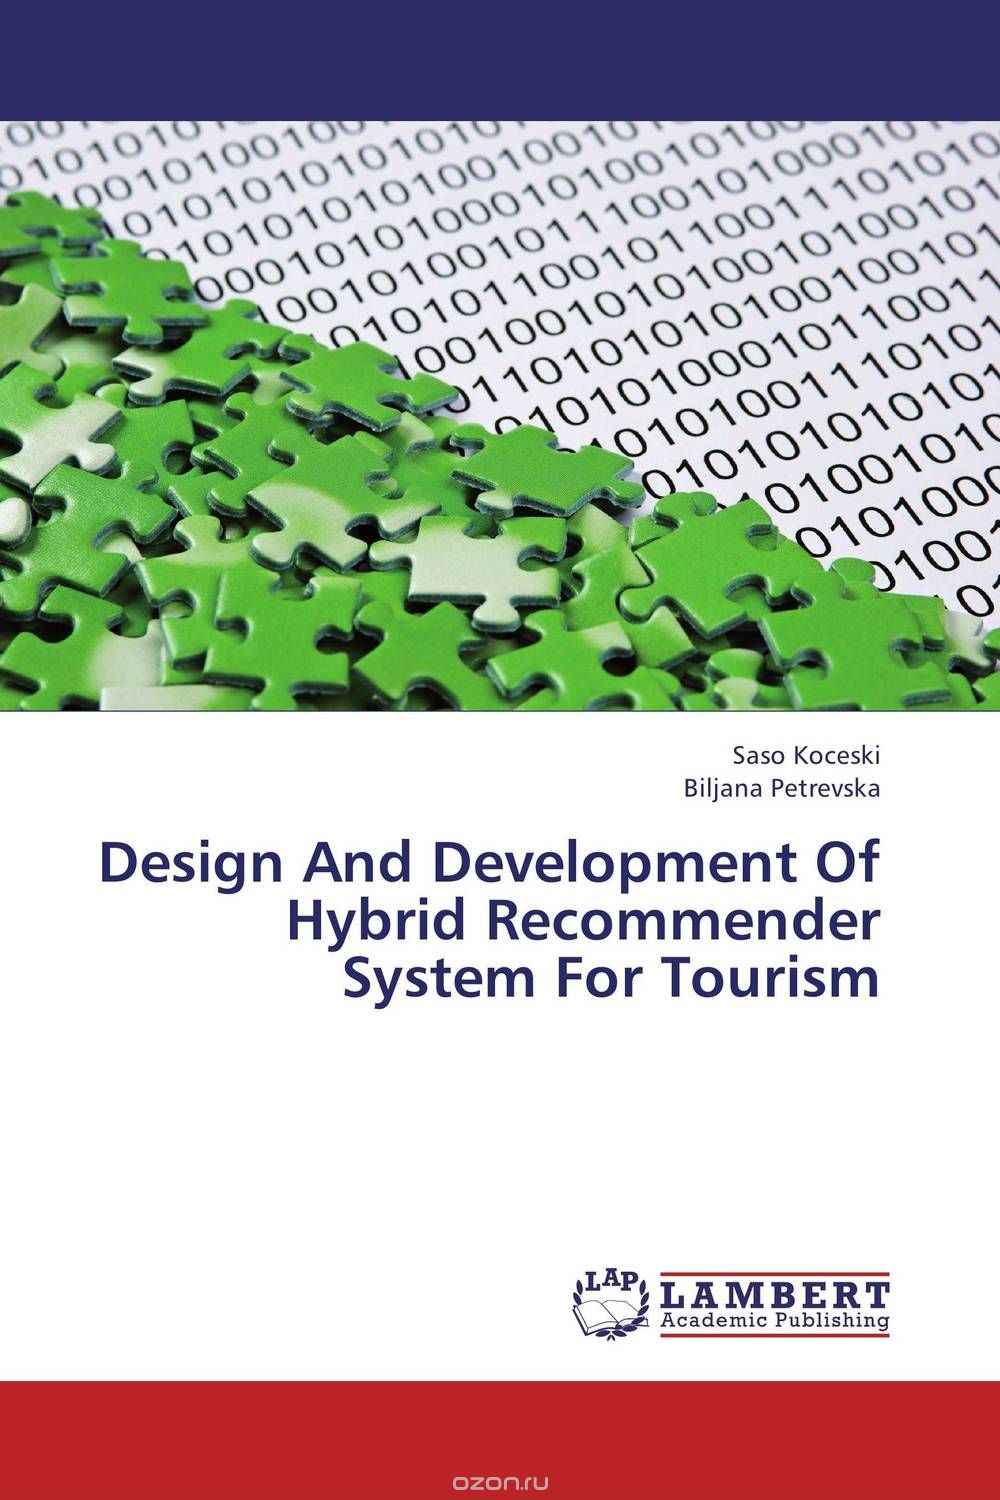 Скачать книгу "Design And Development Of Hybrid Recommender System For Tourism"